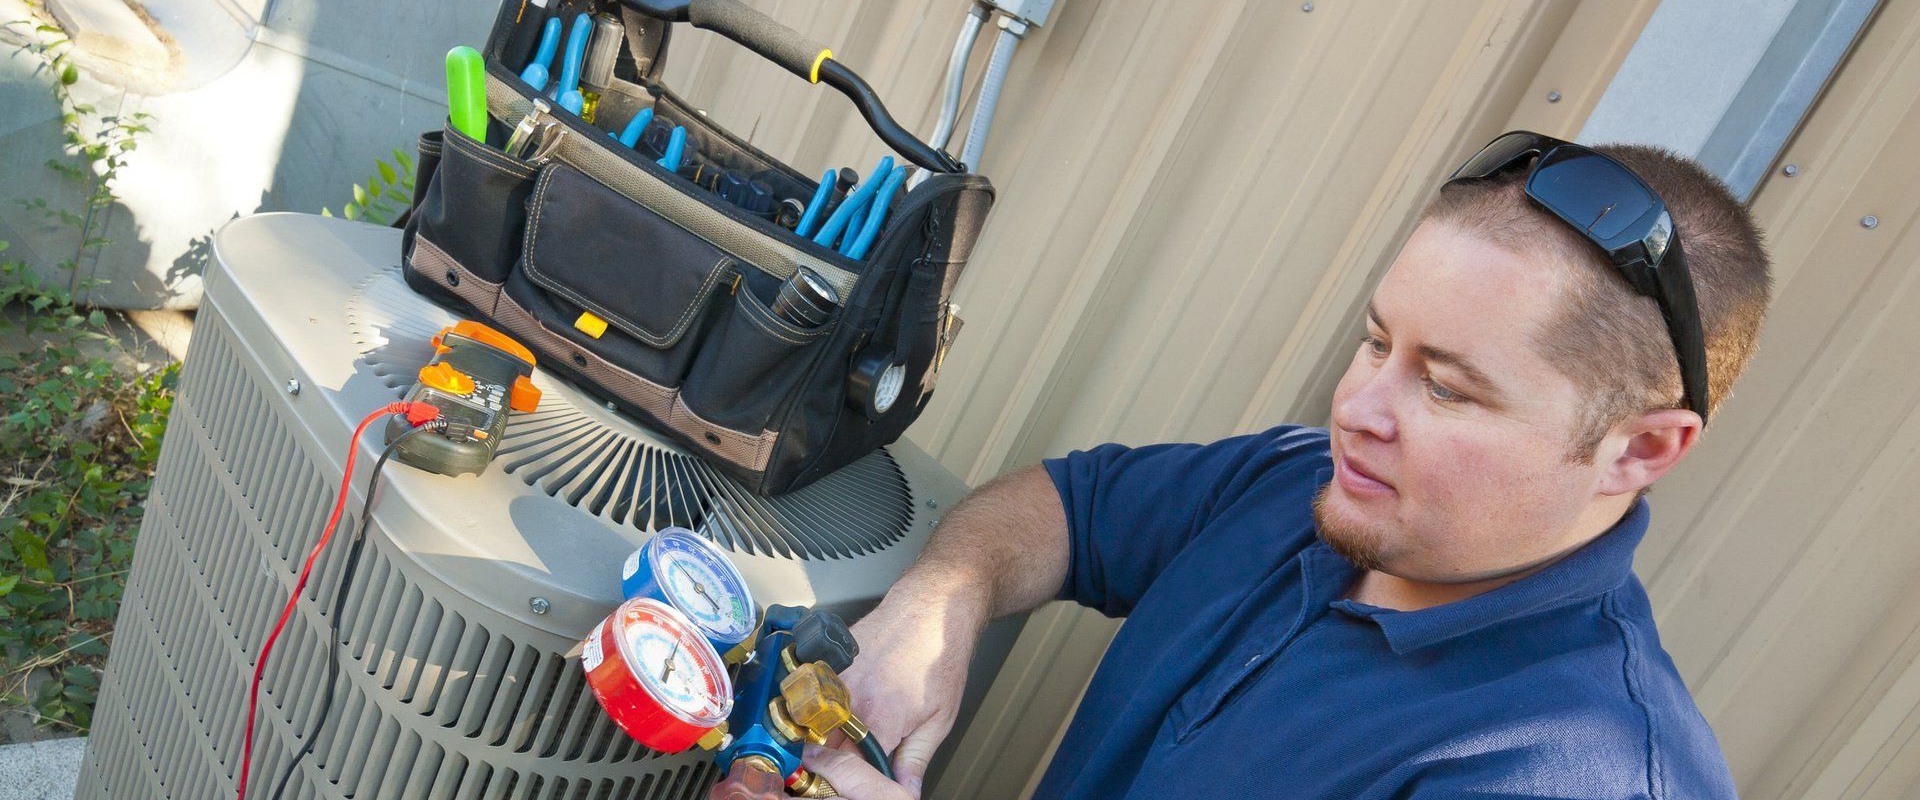 HVAC Maintenance in Coral Springs, FL: Get Professional Repair Services